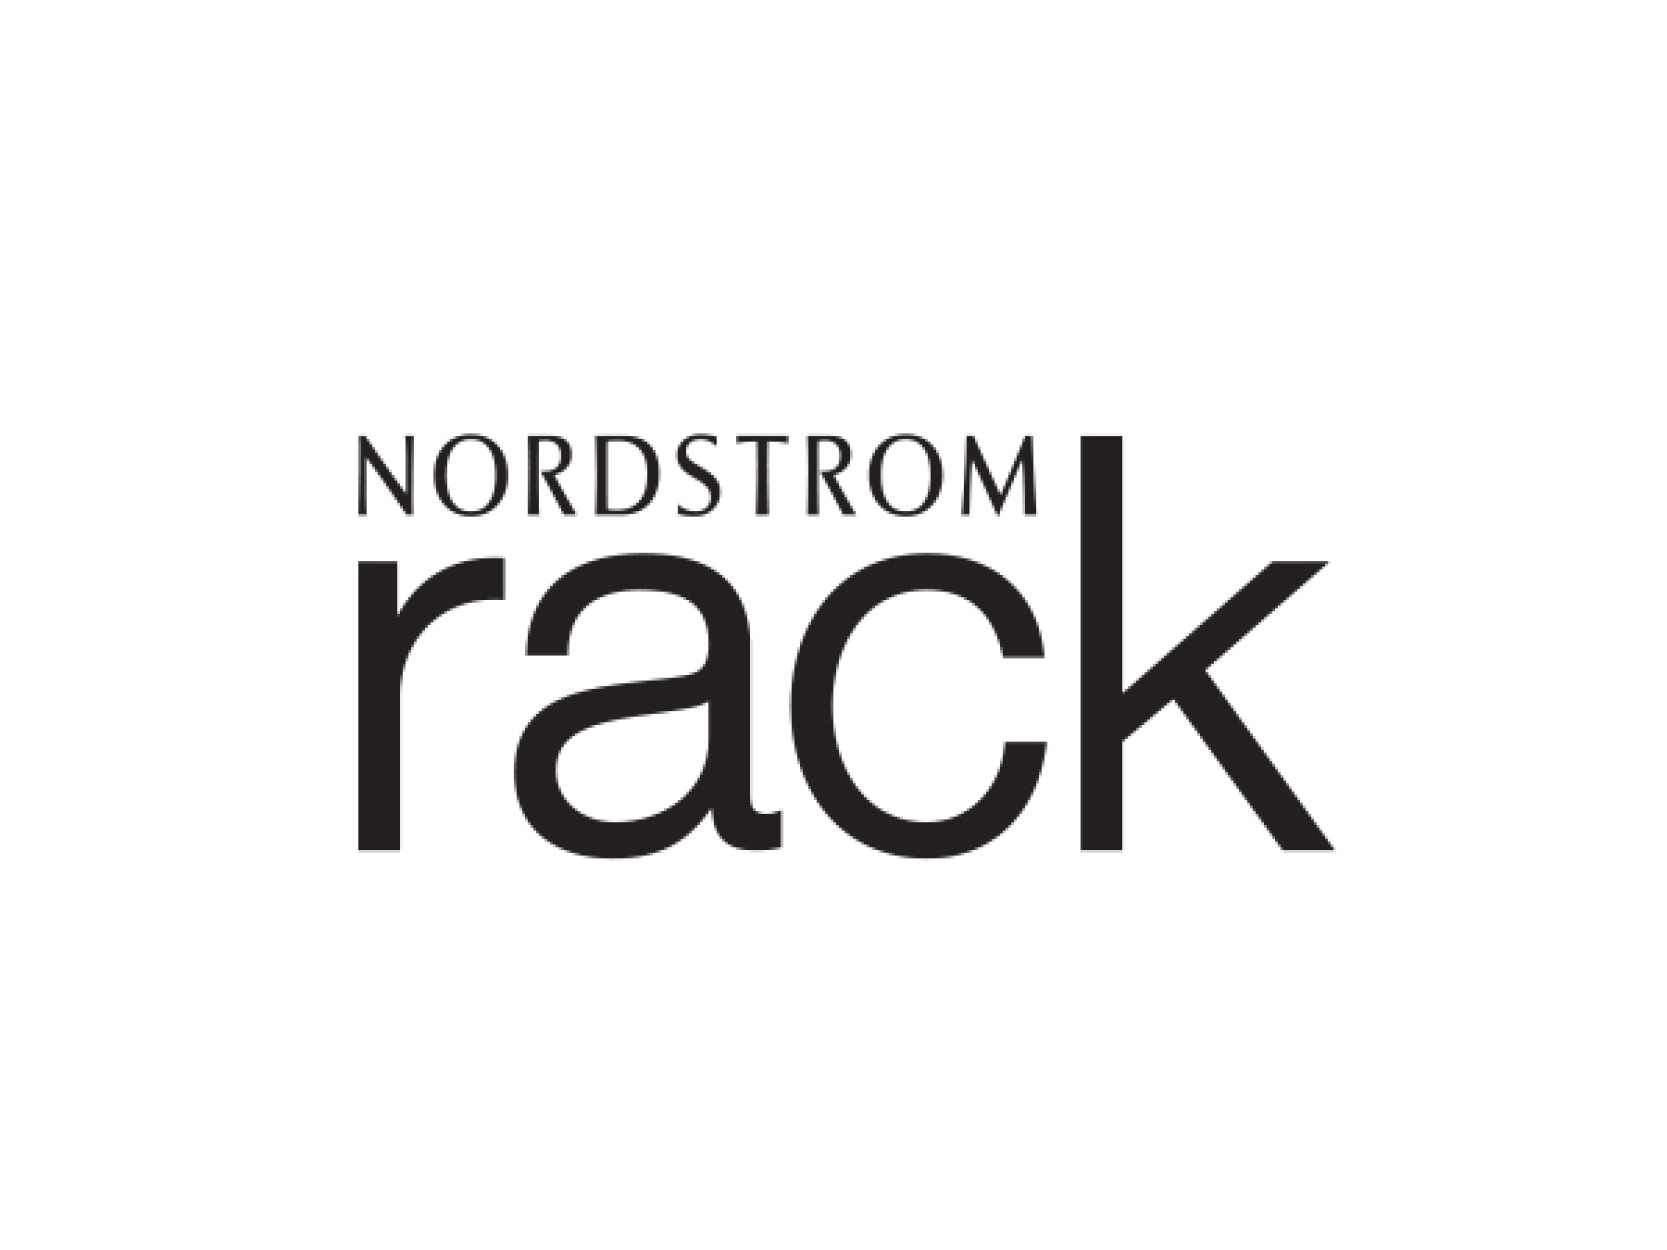 Roger (6'5) on X: Honestly I think the new Nordstrom Rack logo